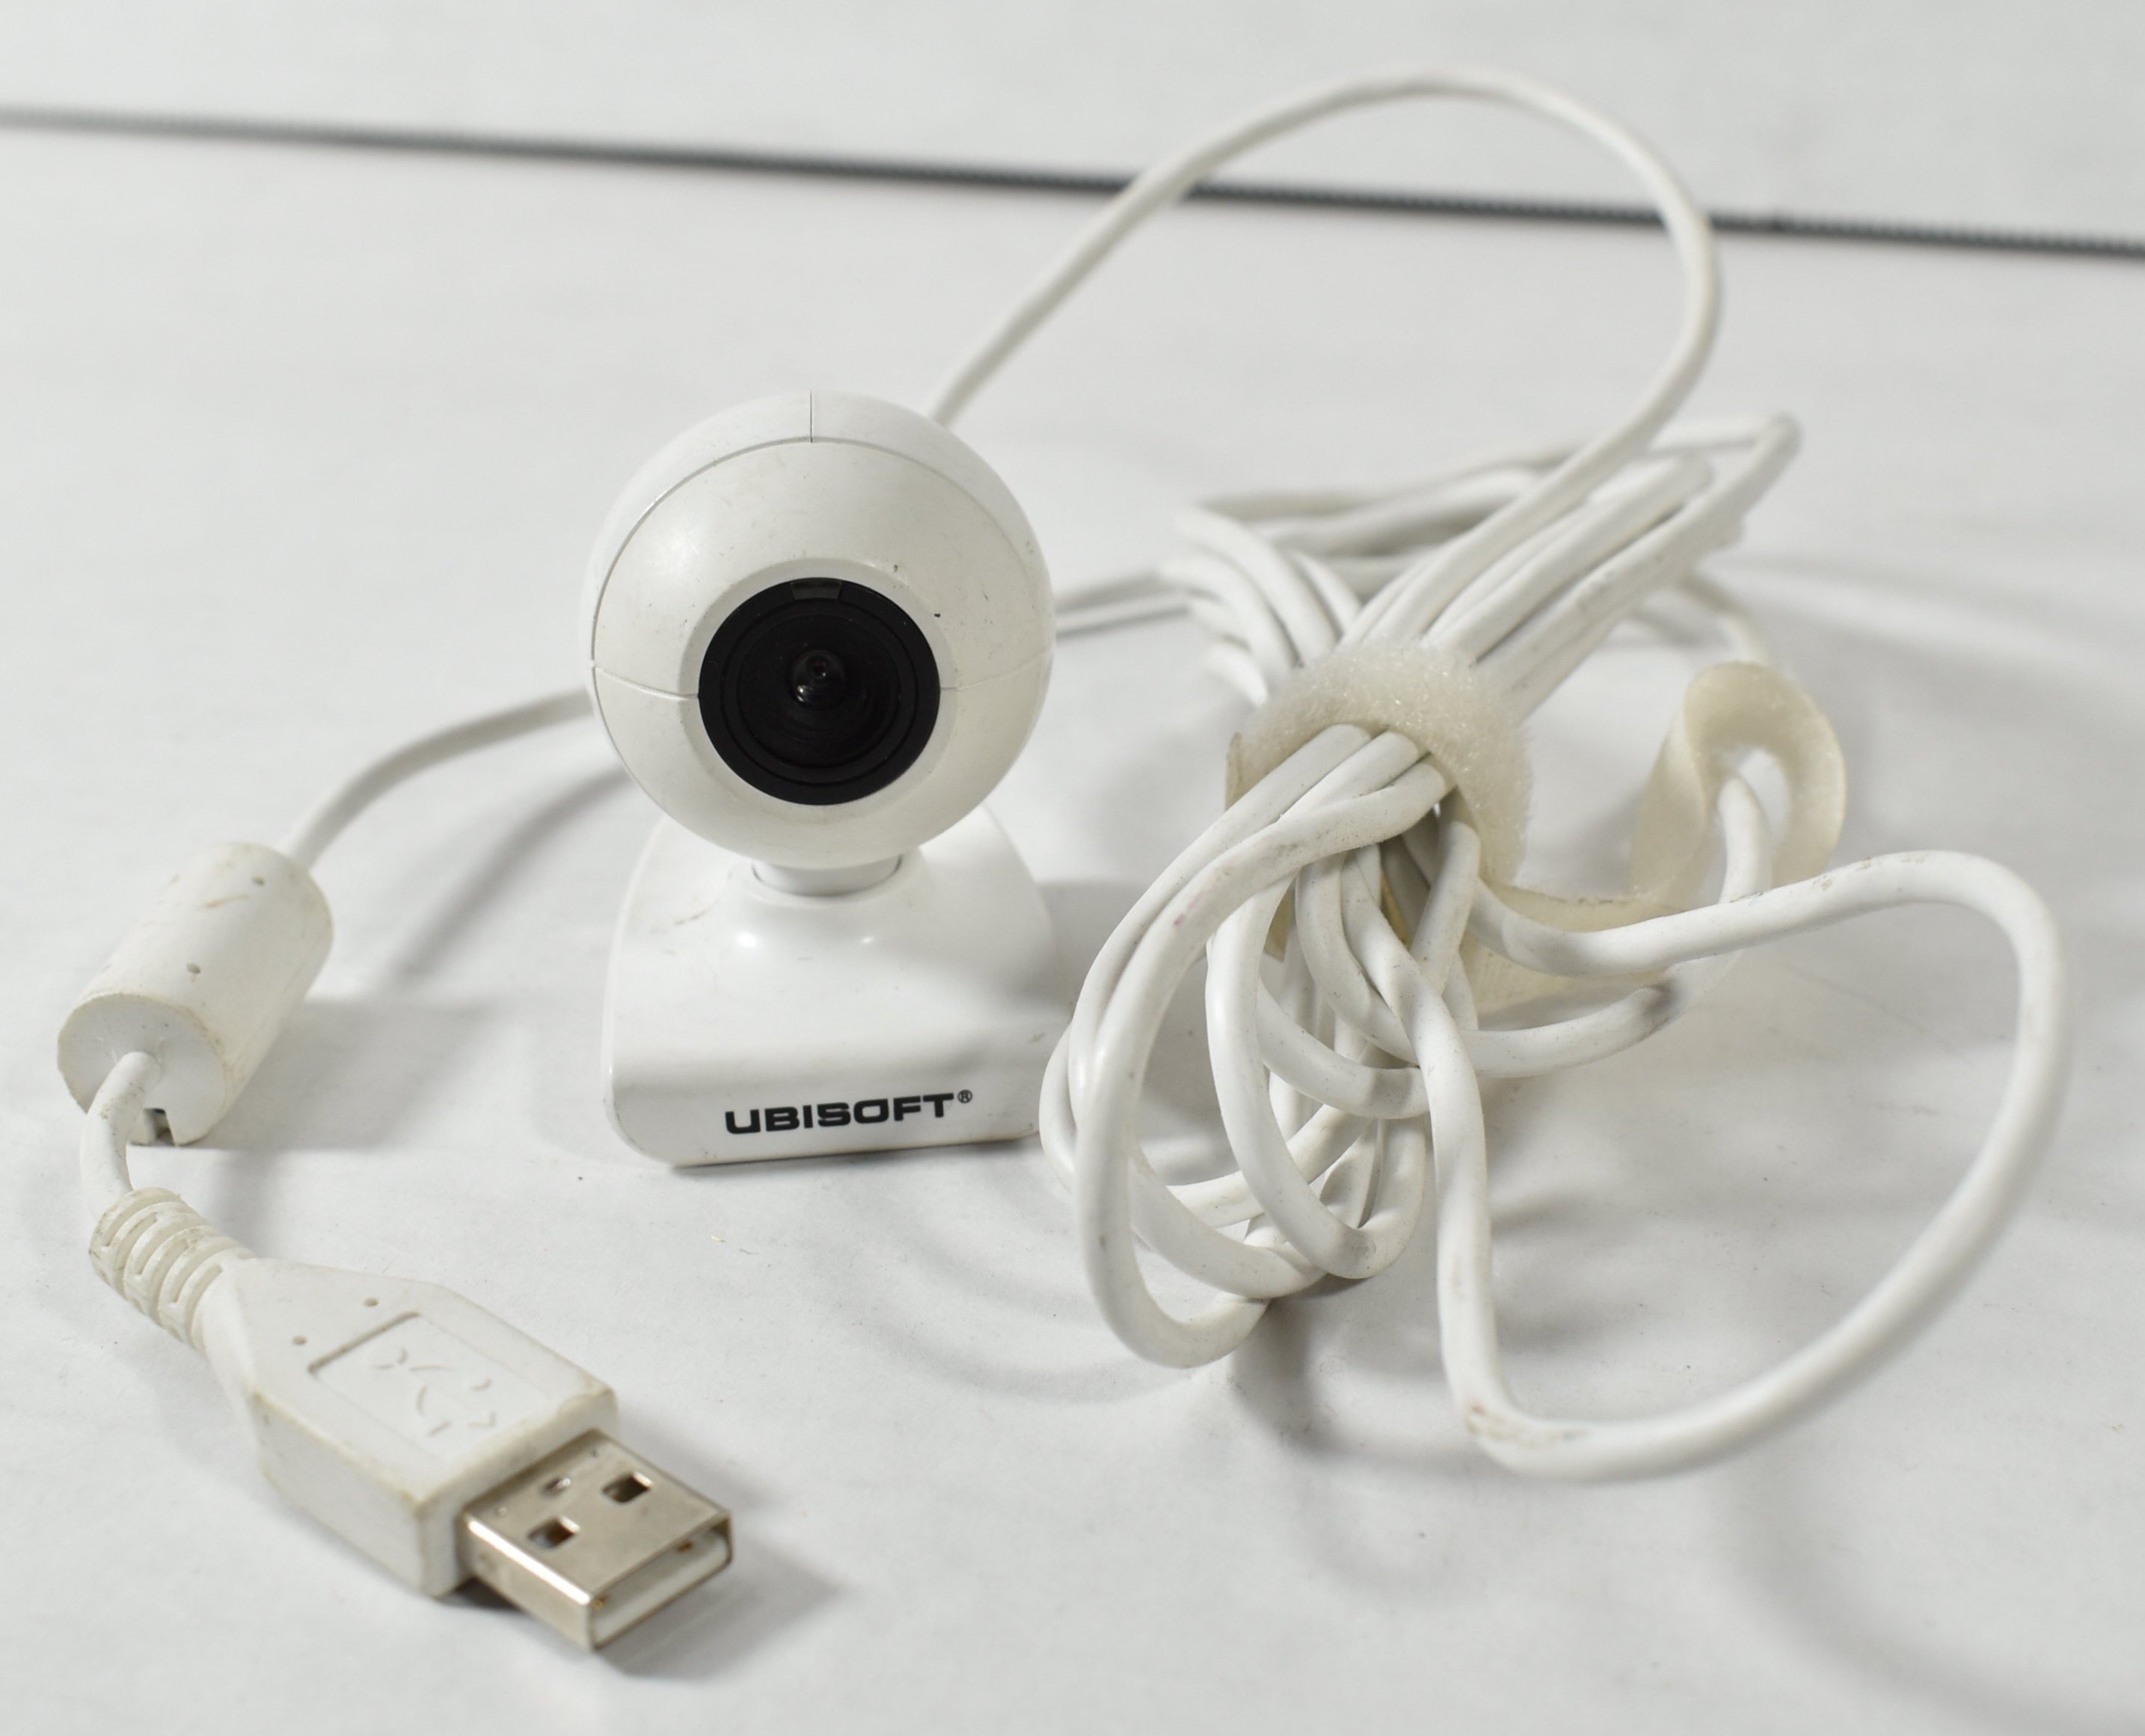 Ubisoft White USB Camera Web Cam WC04